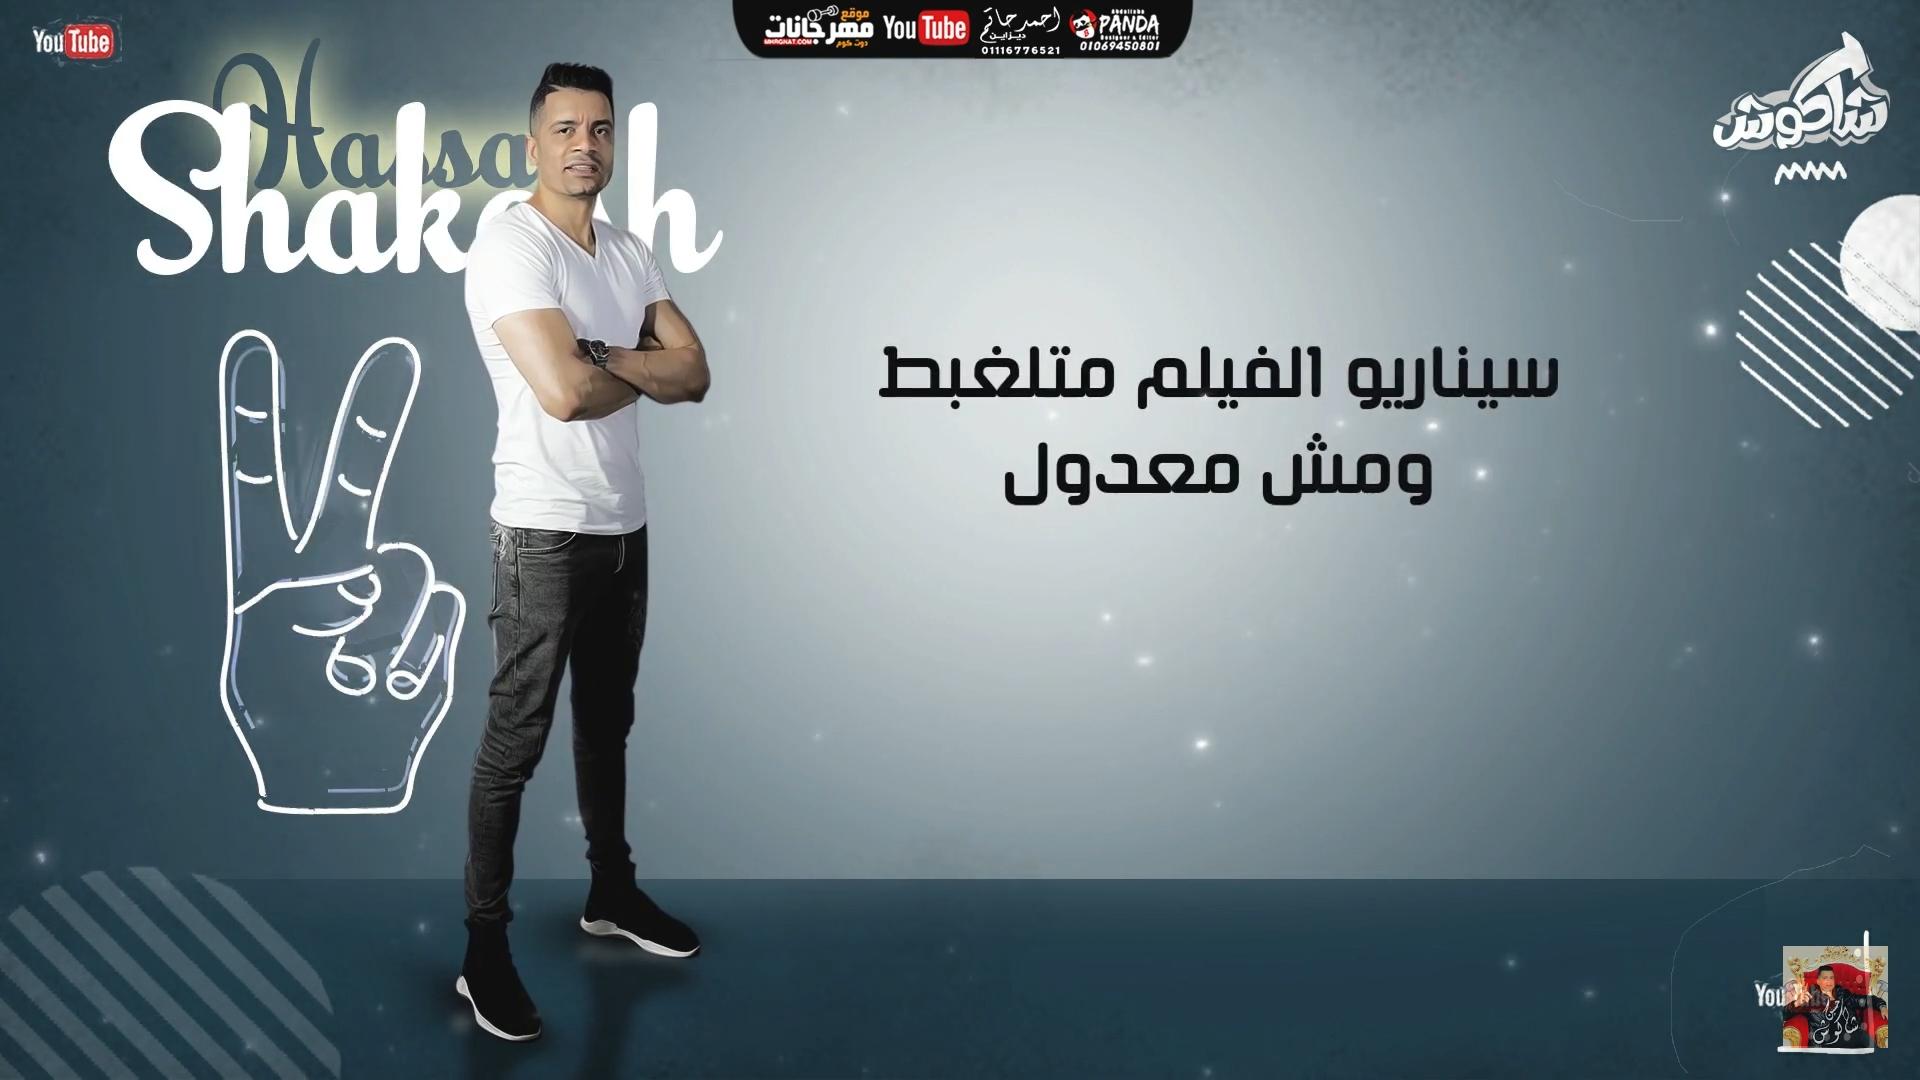 مهرجان كله راح for Android - APK Download